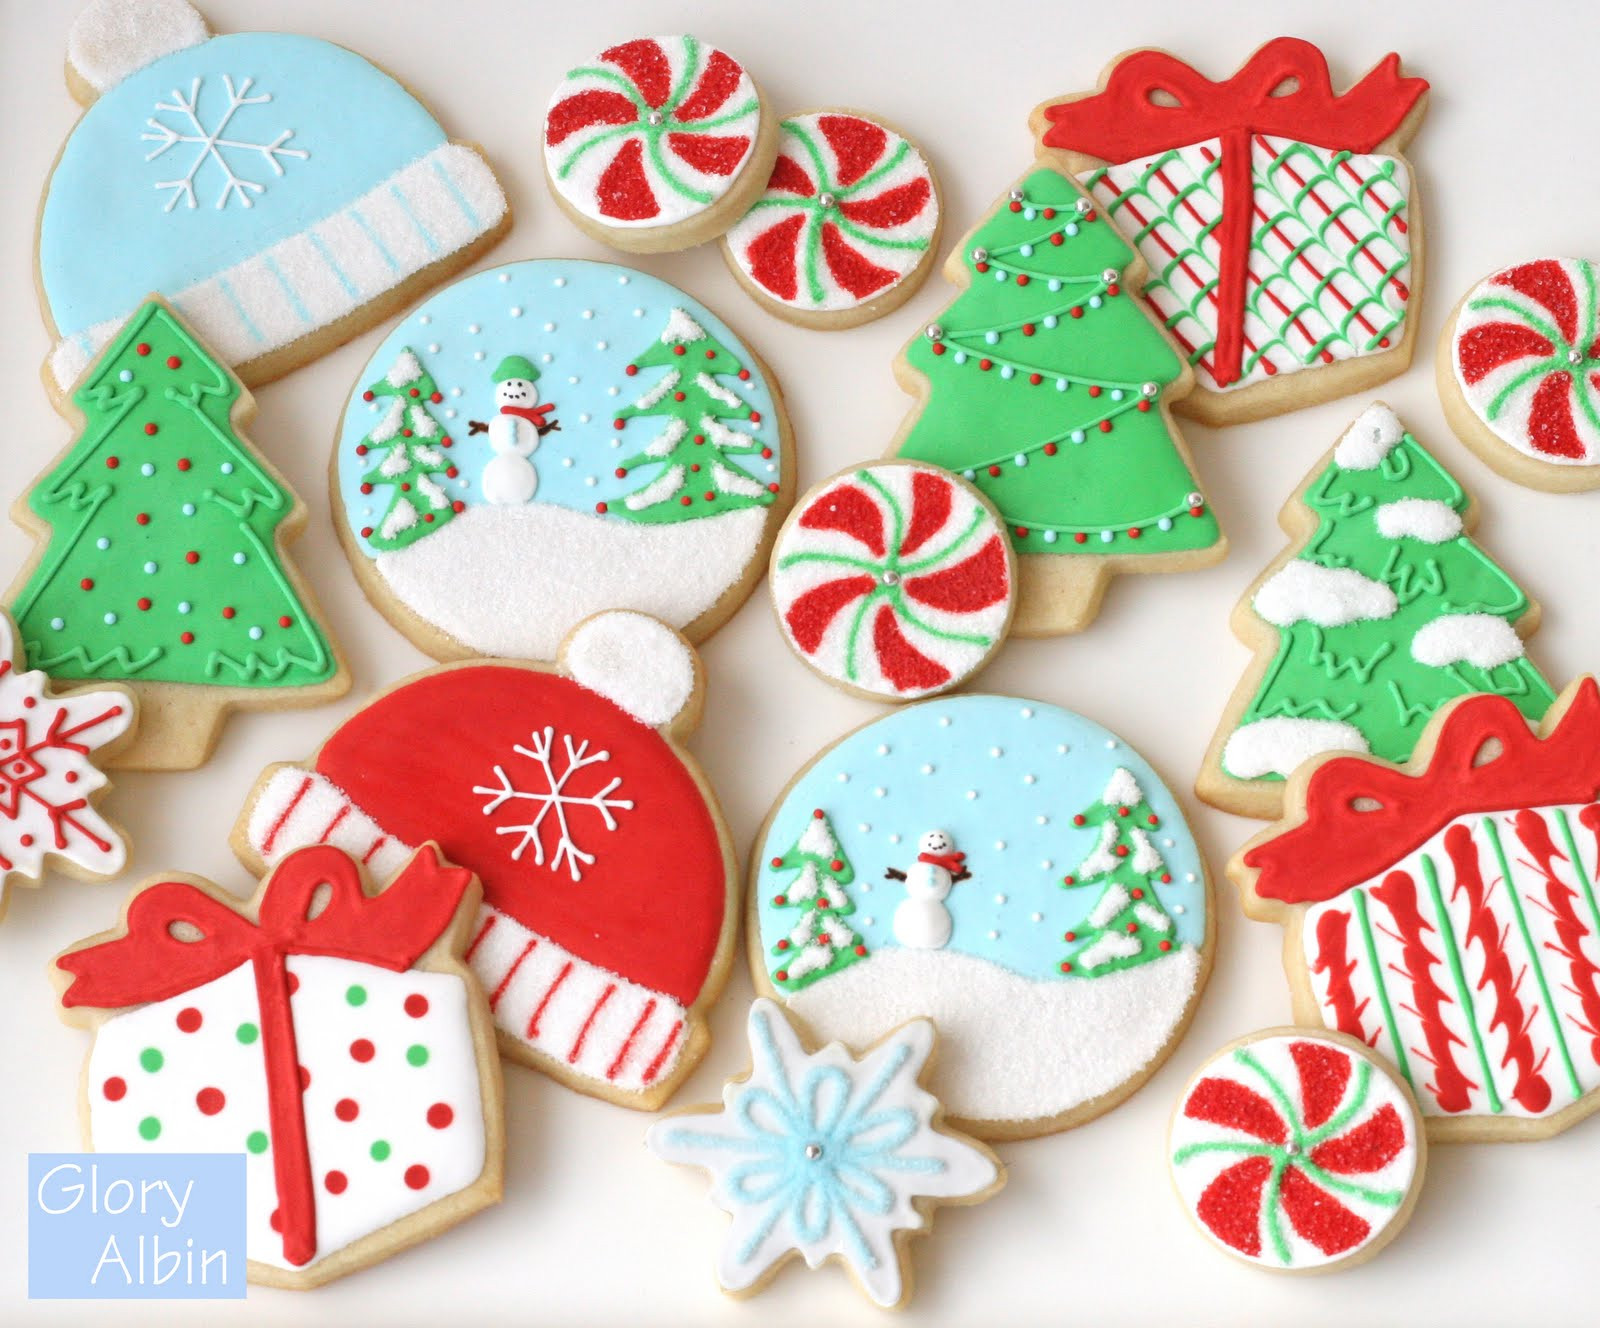 Decorating Sugar Cookies with Royal Icing New Decorating Sugar Cookies with Royal Icing Glorious Treats